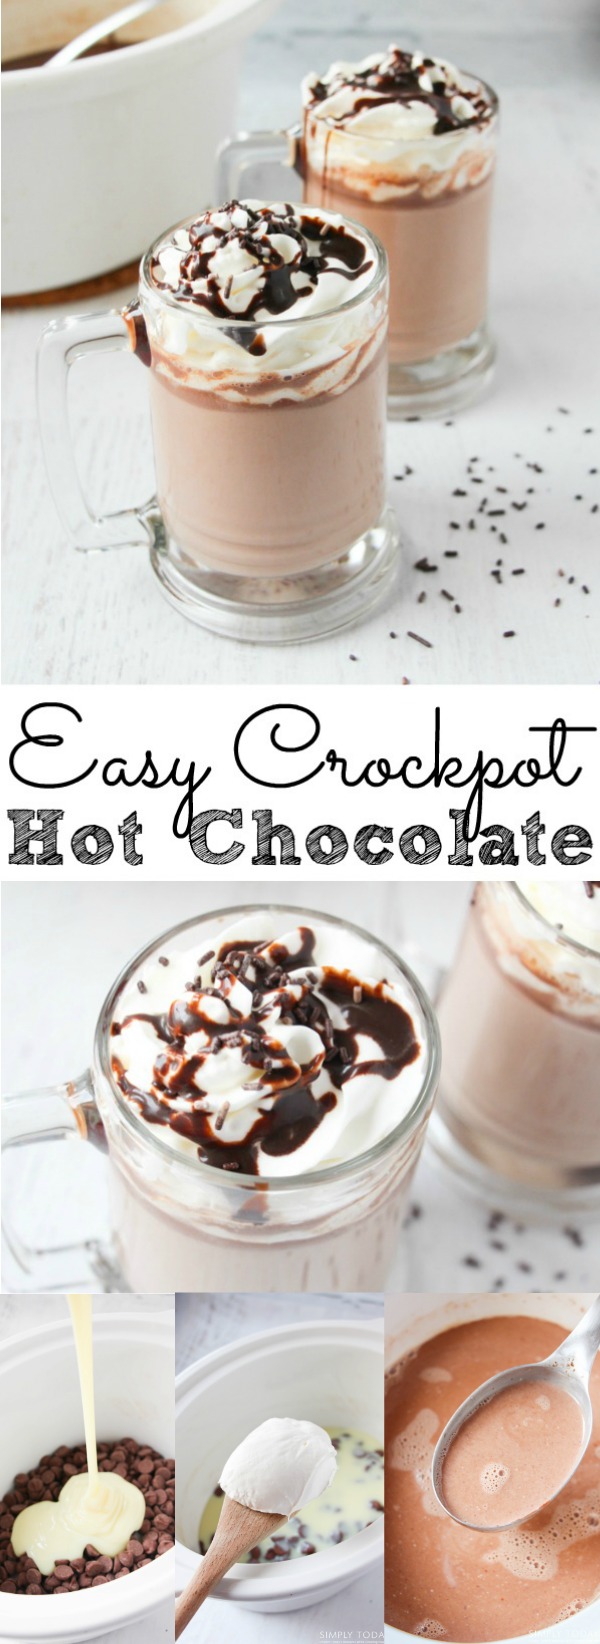 https://simplytodaylife.com/wp-content/uploads/2016/12/Easy-Crockpot-Hot-Chocolate-Recipe-simplytodaylife.com_.jpg